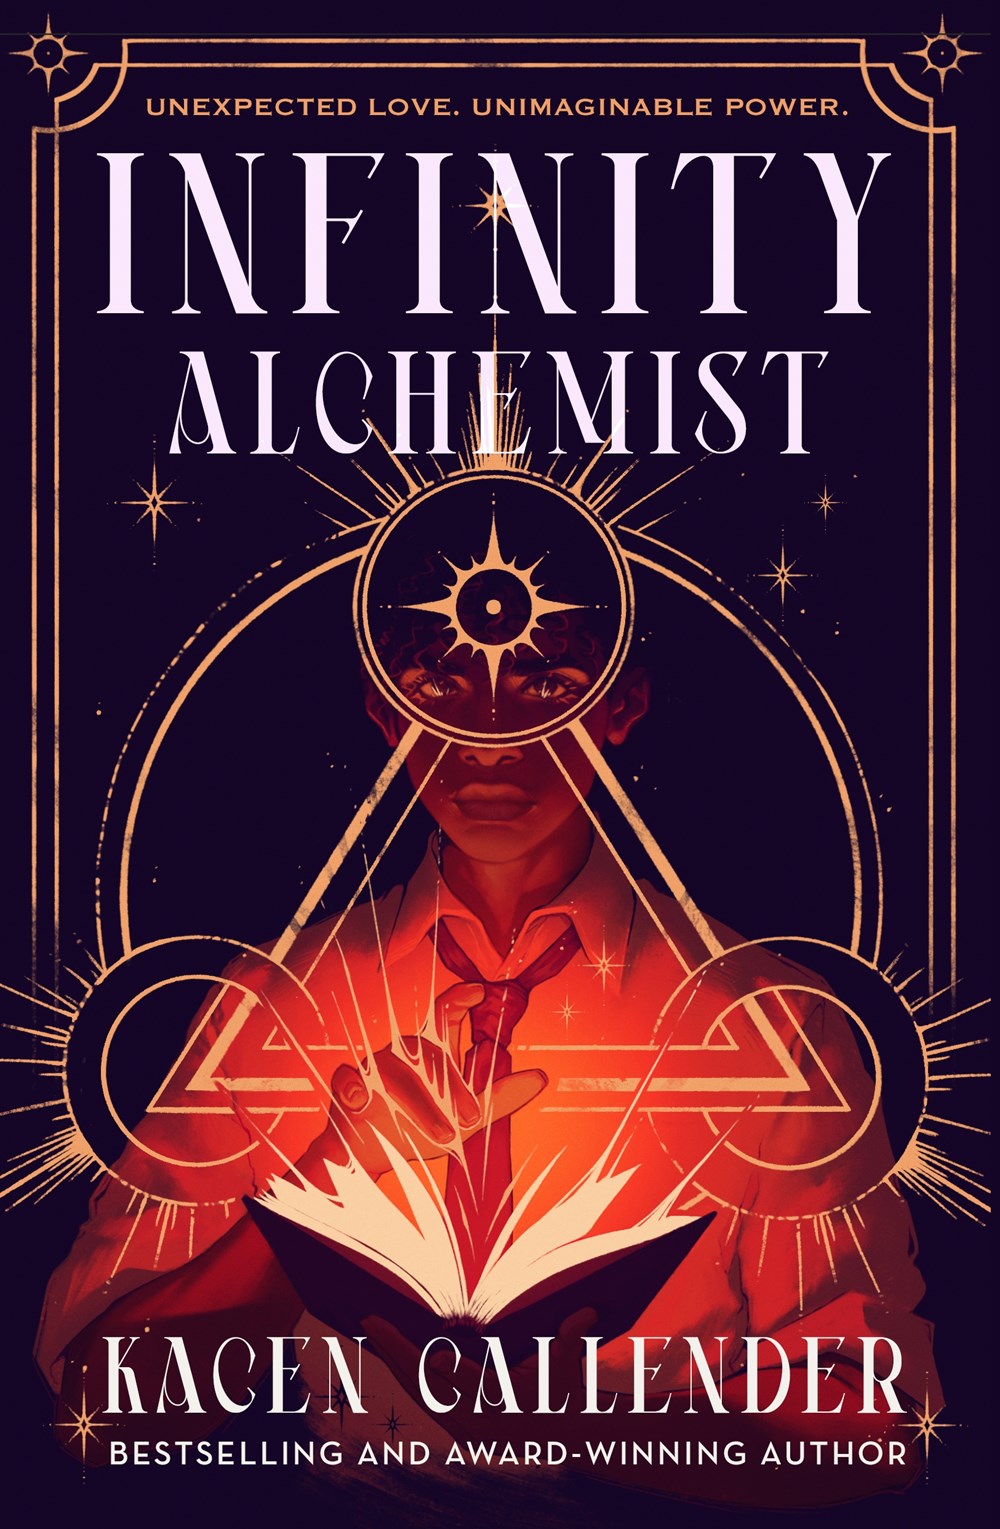 Infinity Alchemist - Kacen Callender - SIGNED COPIES